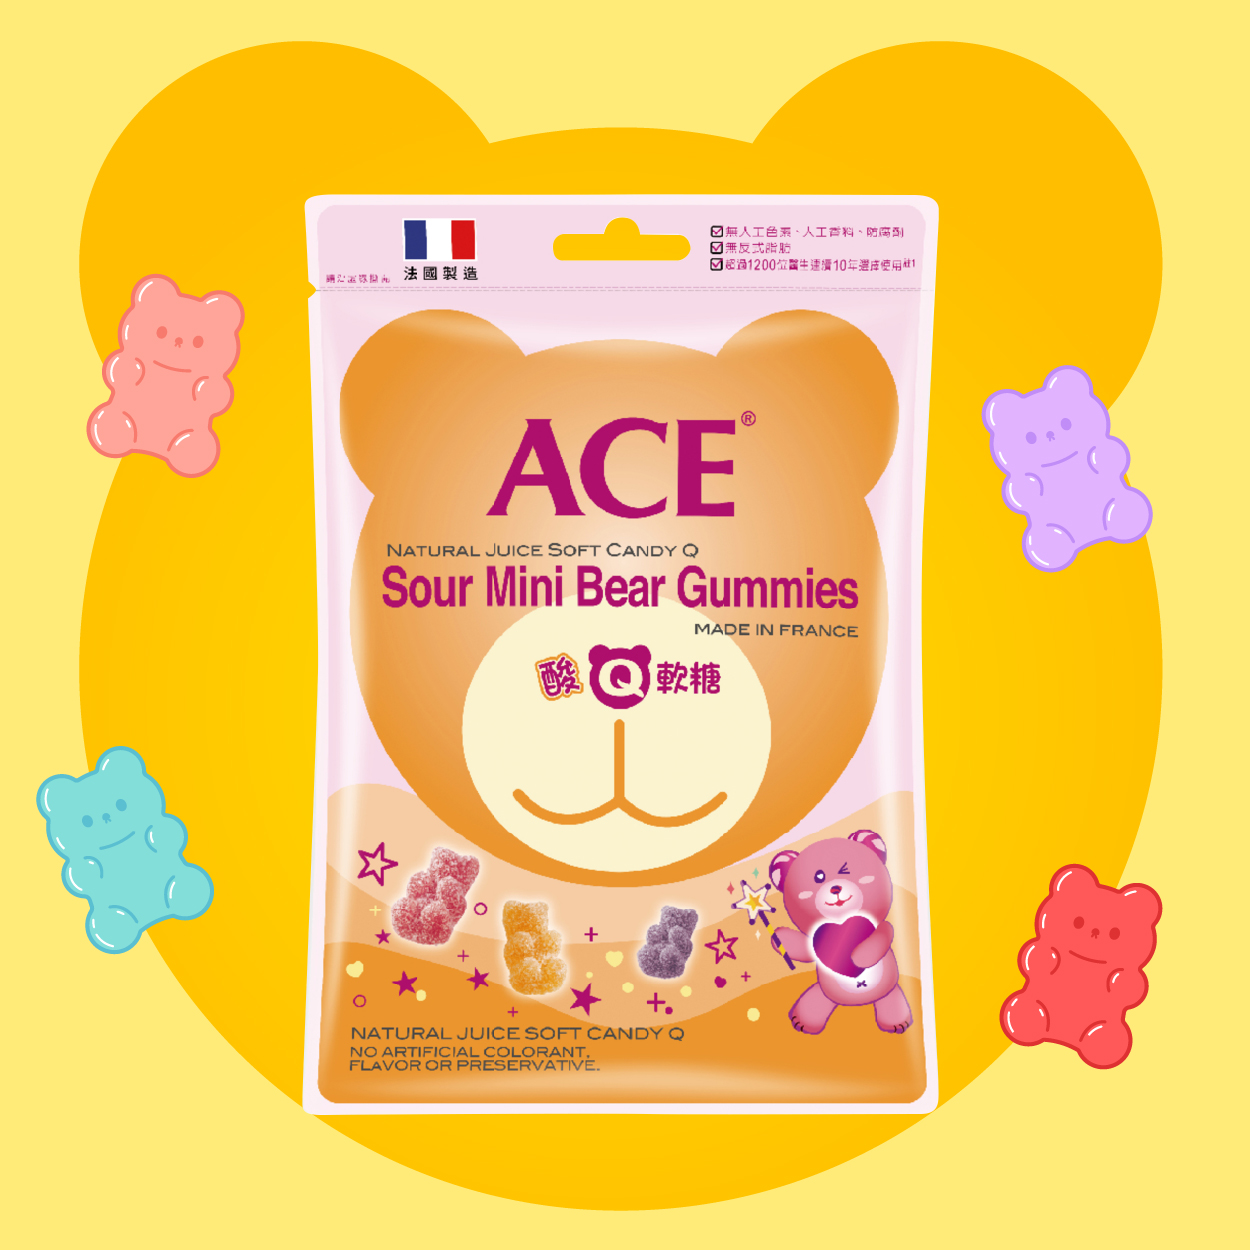 ACE 酸Q熊軟糖 媽媽心目中的軟糖首選品牌——法國浪漫與安心的存在